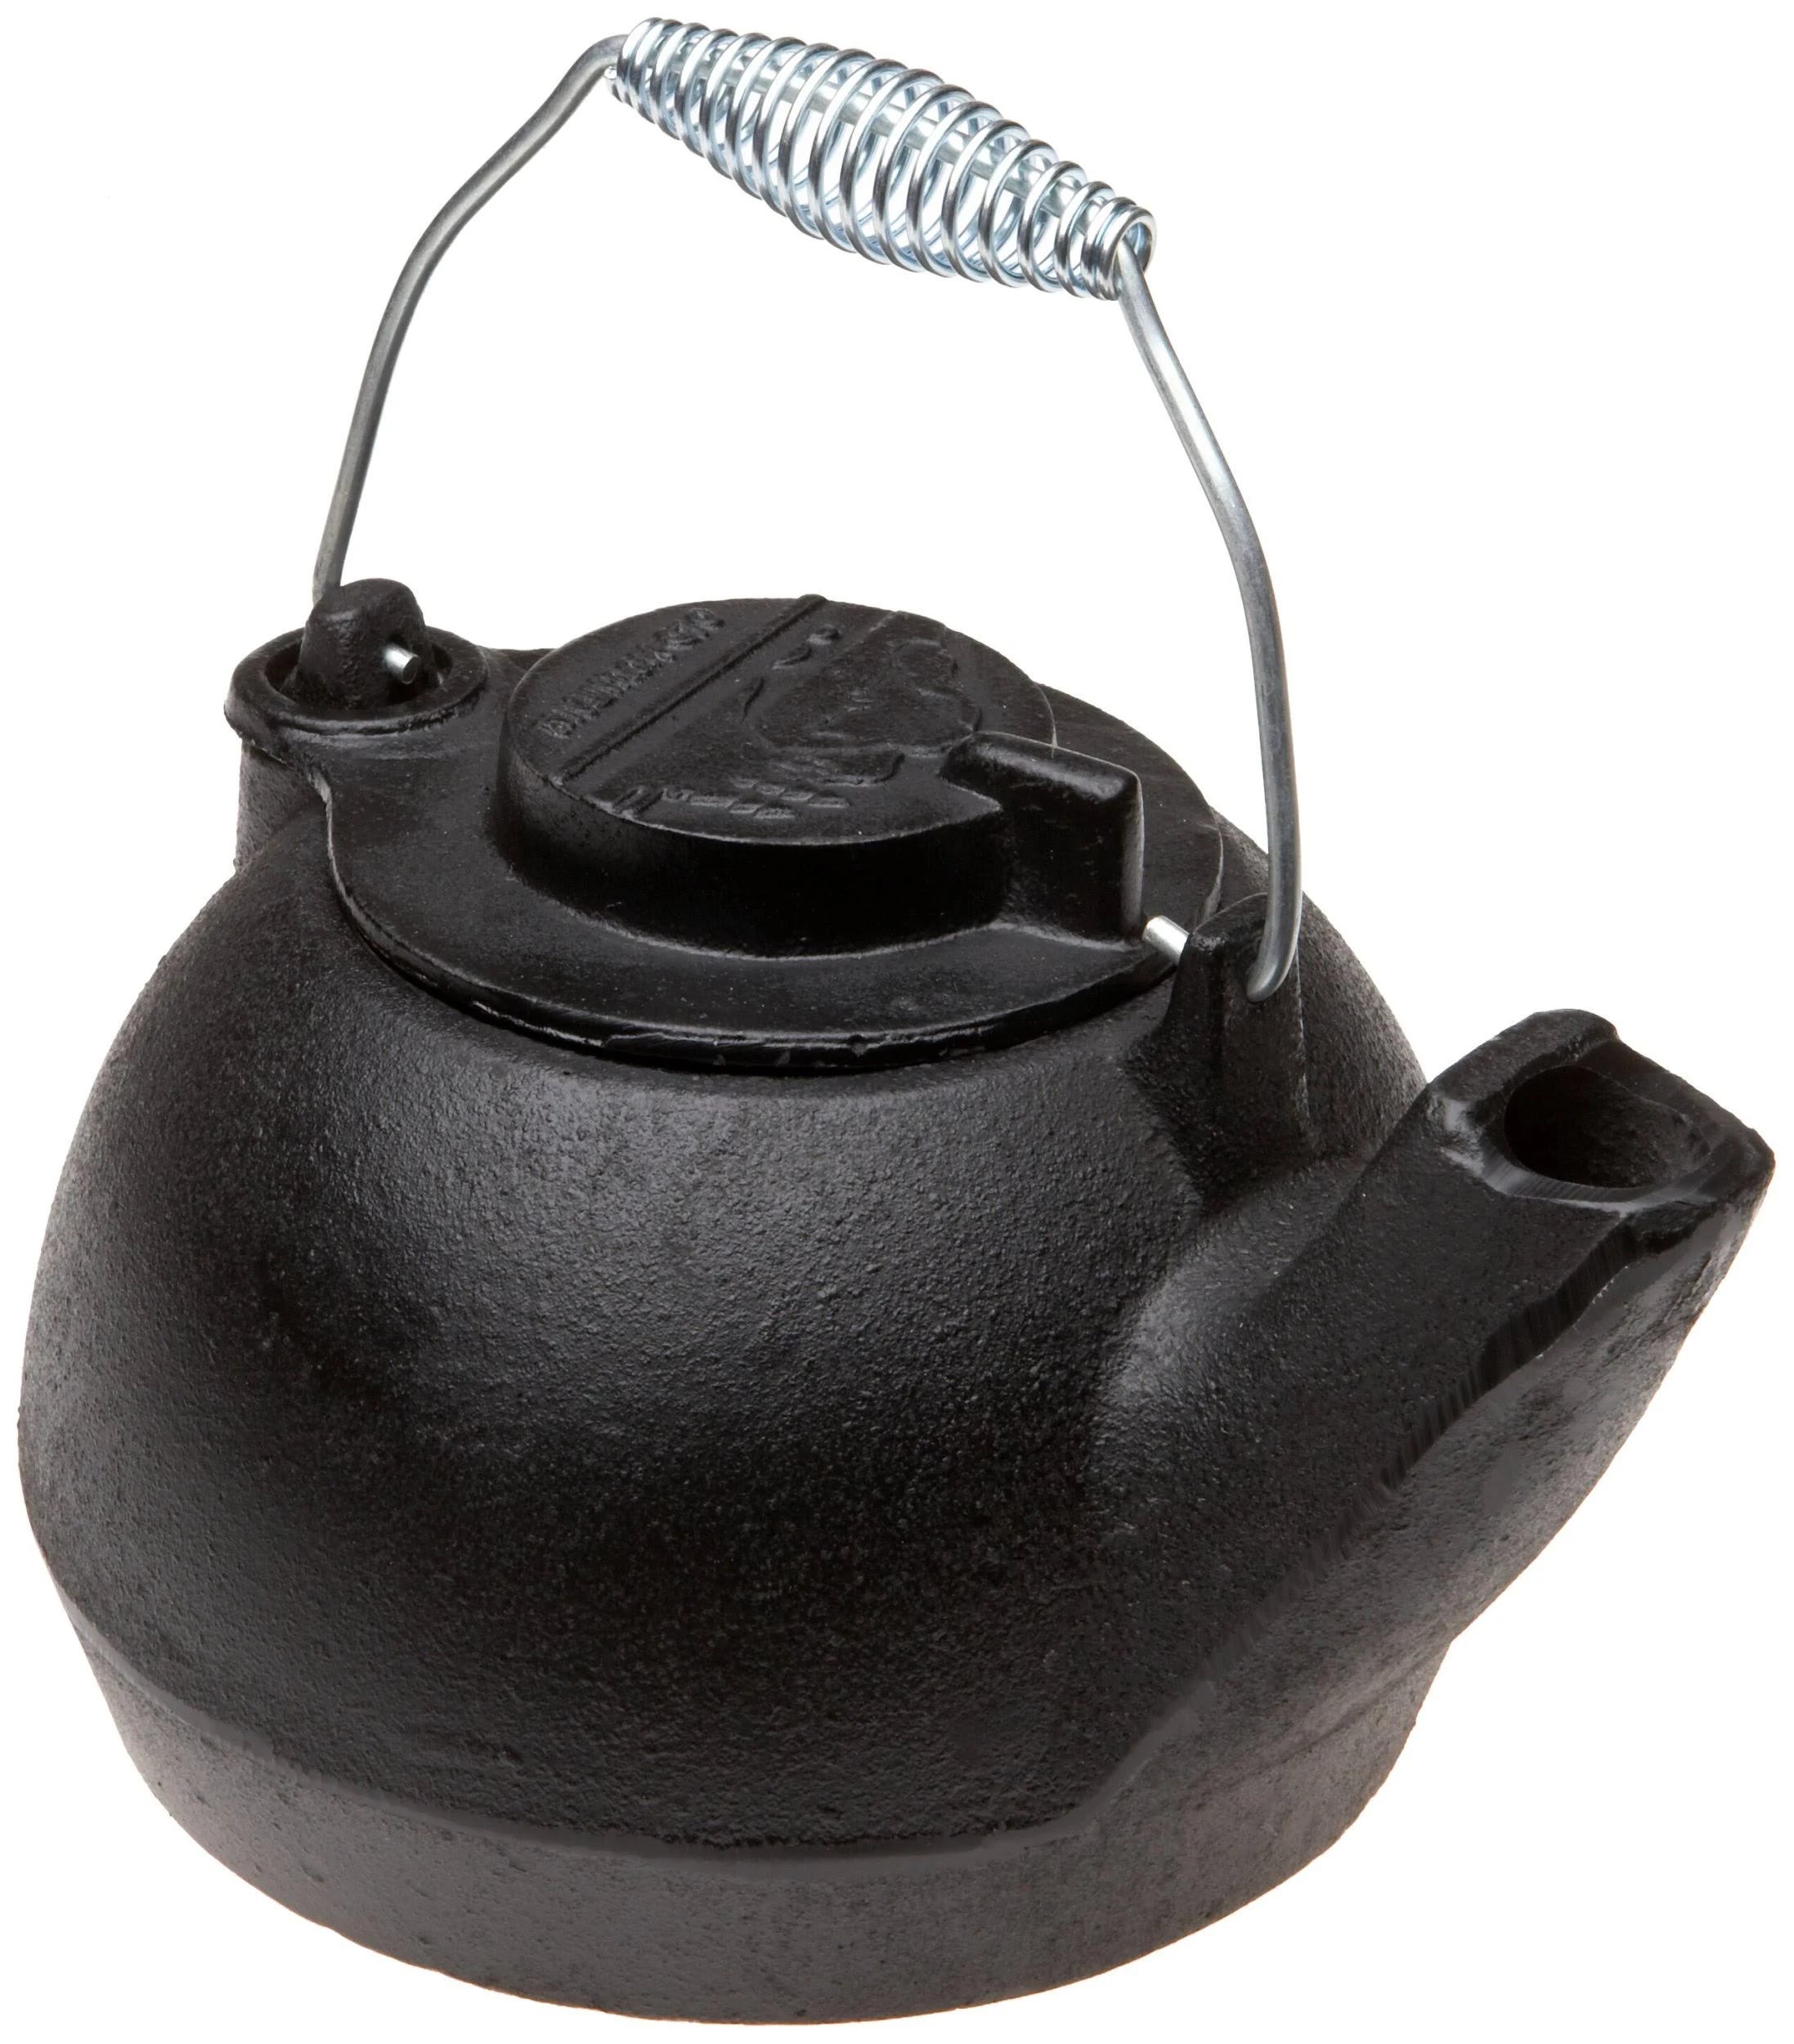 Old Mountain Cast Iron Tea Kettle for 2 Quarts of Coffee or Tea | Image